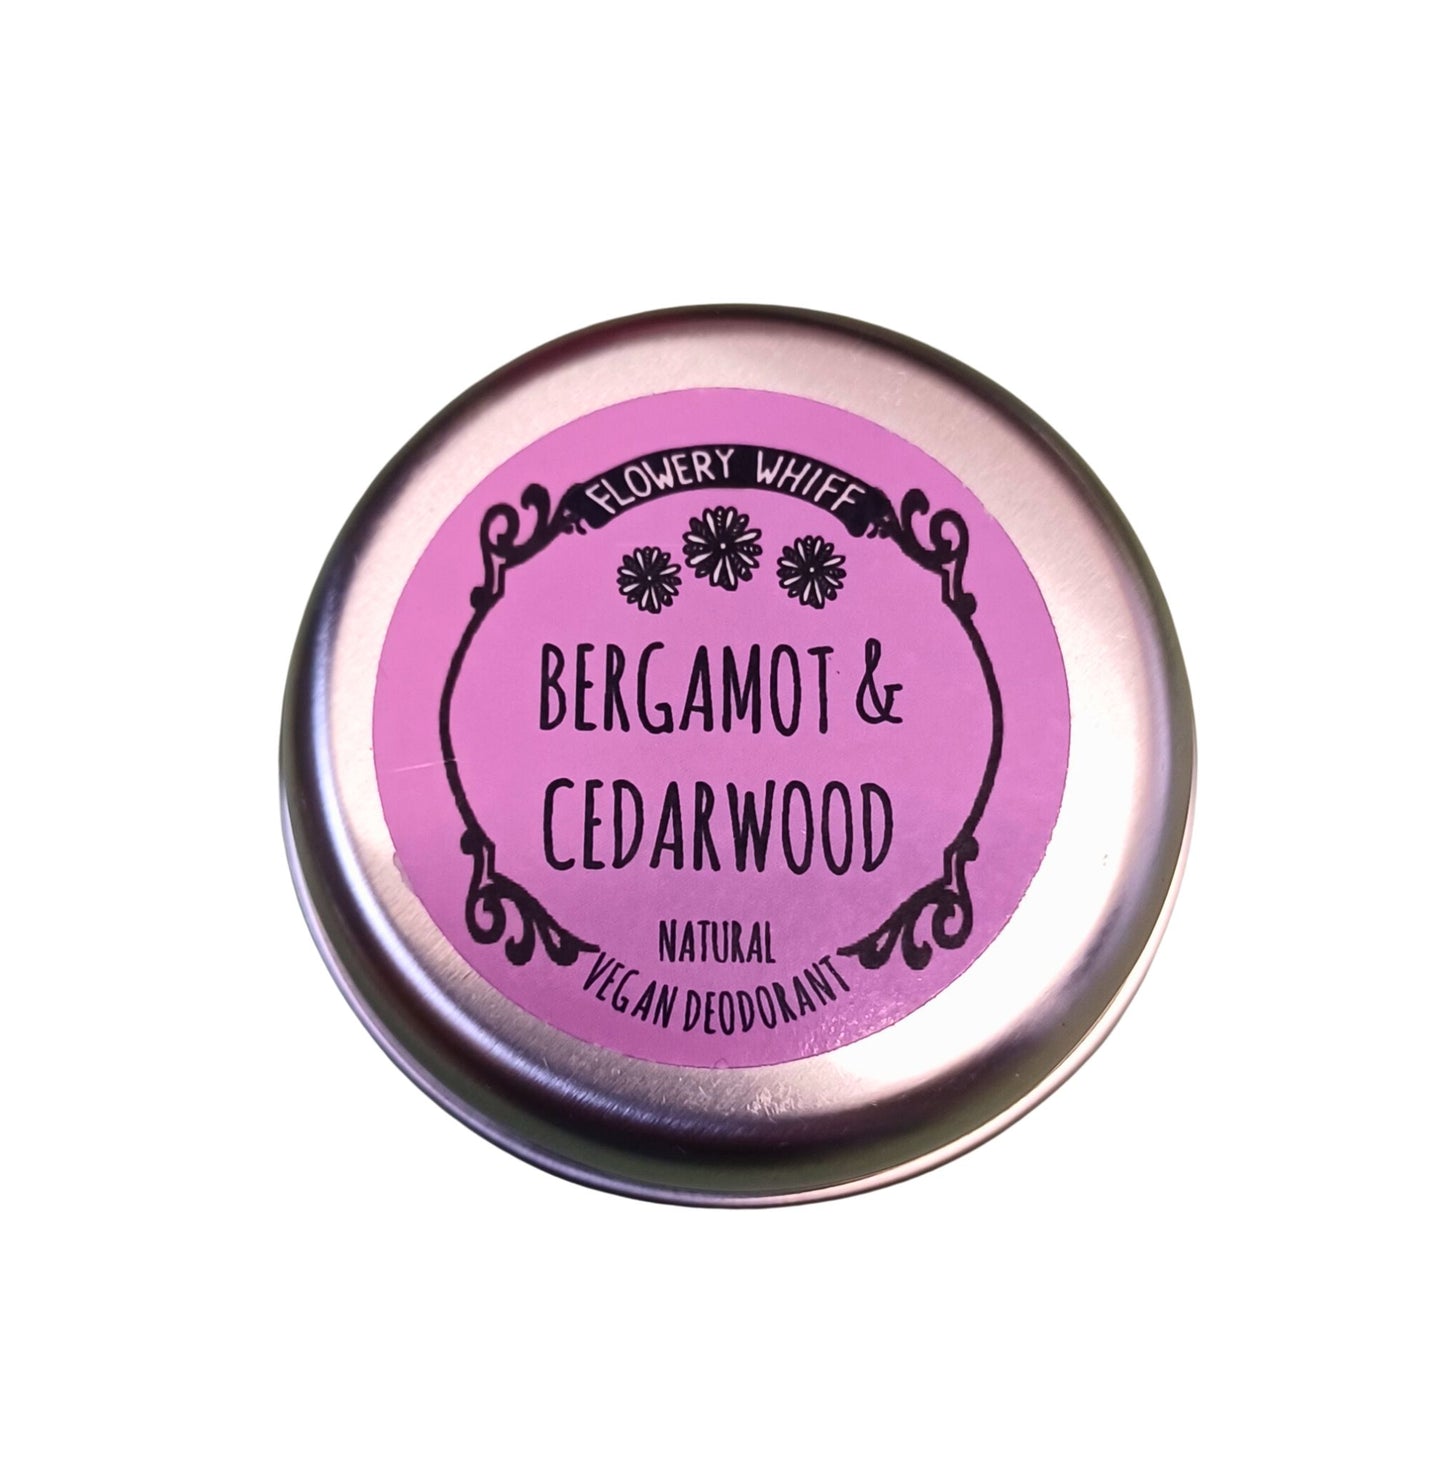 Bergamot & Cedarwood Vegan Deodorant Tins